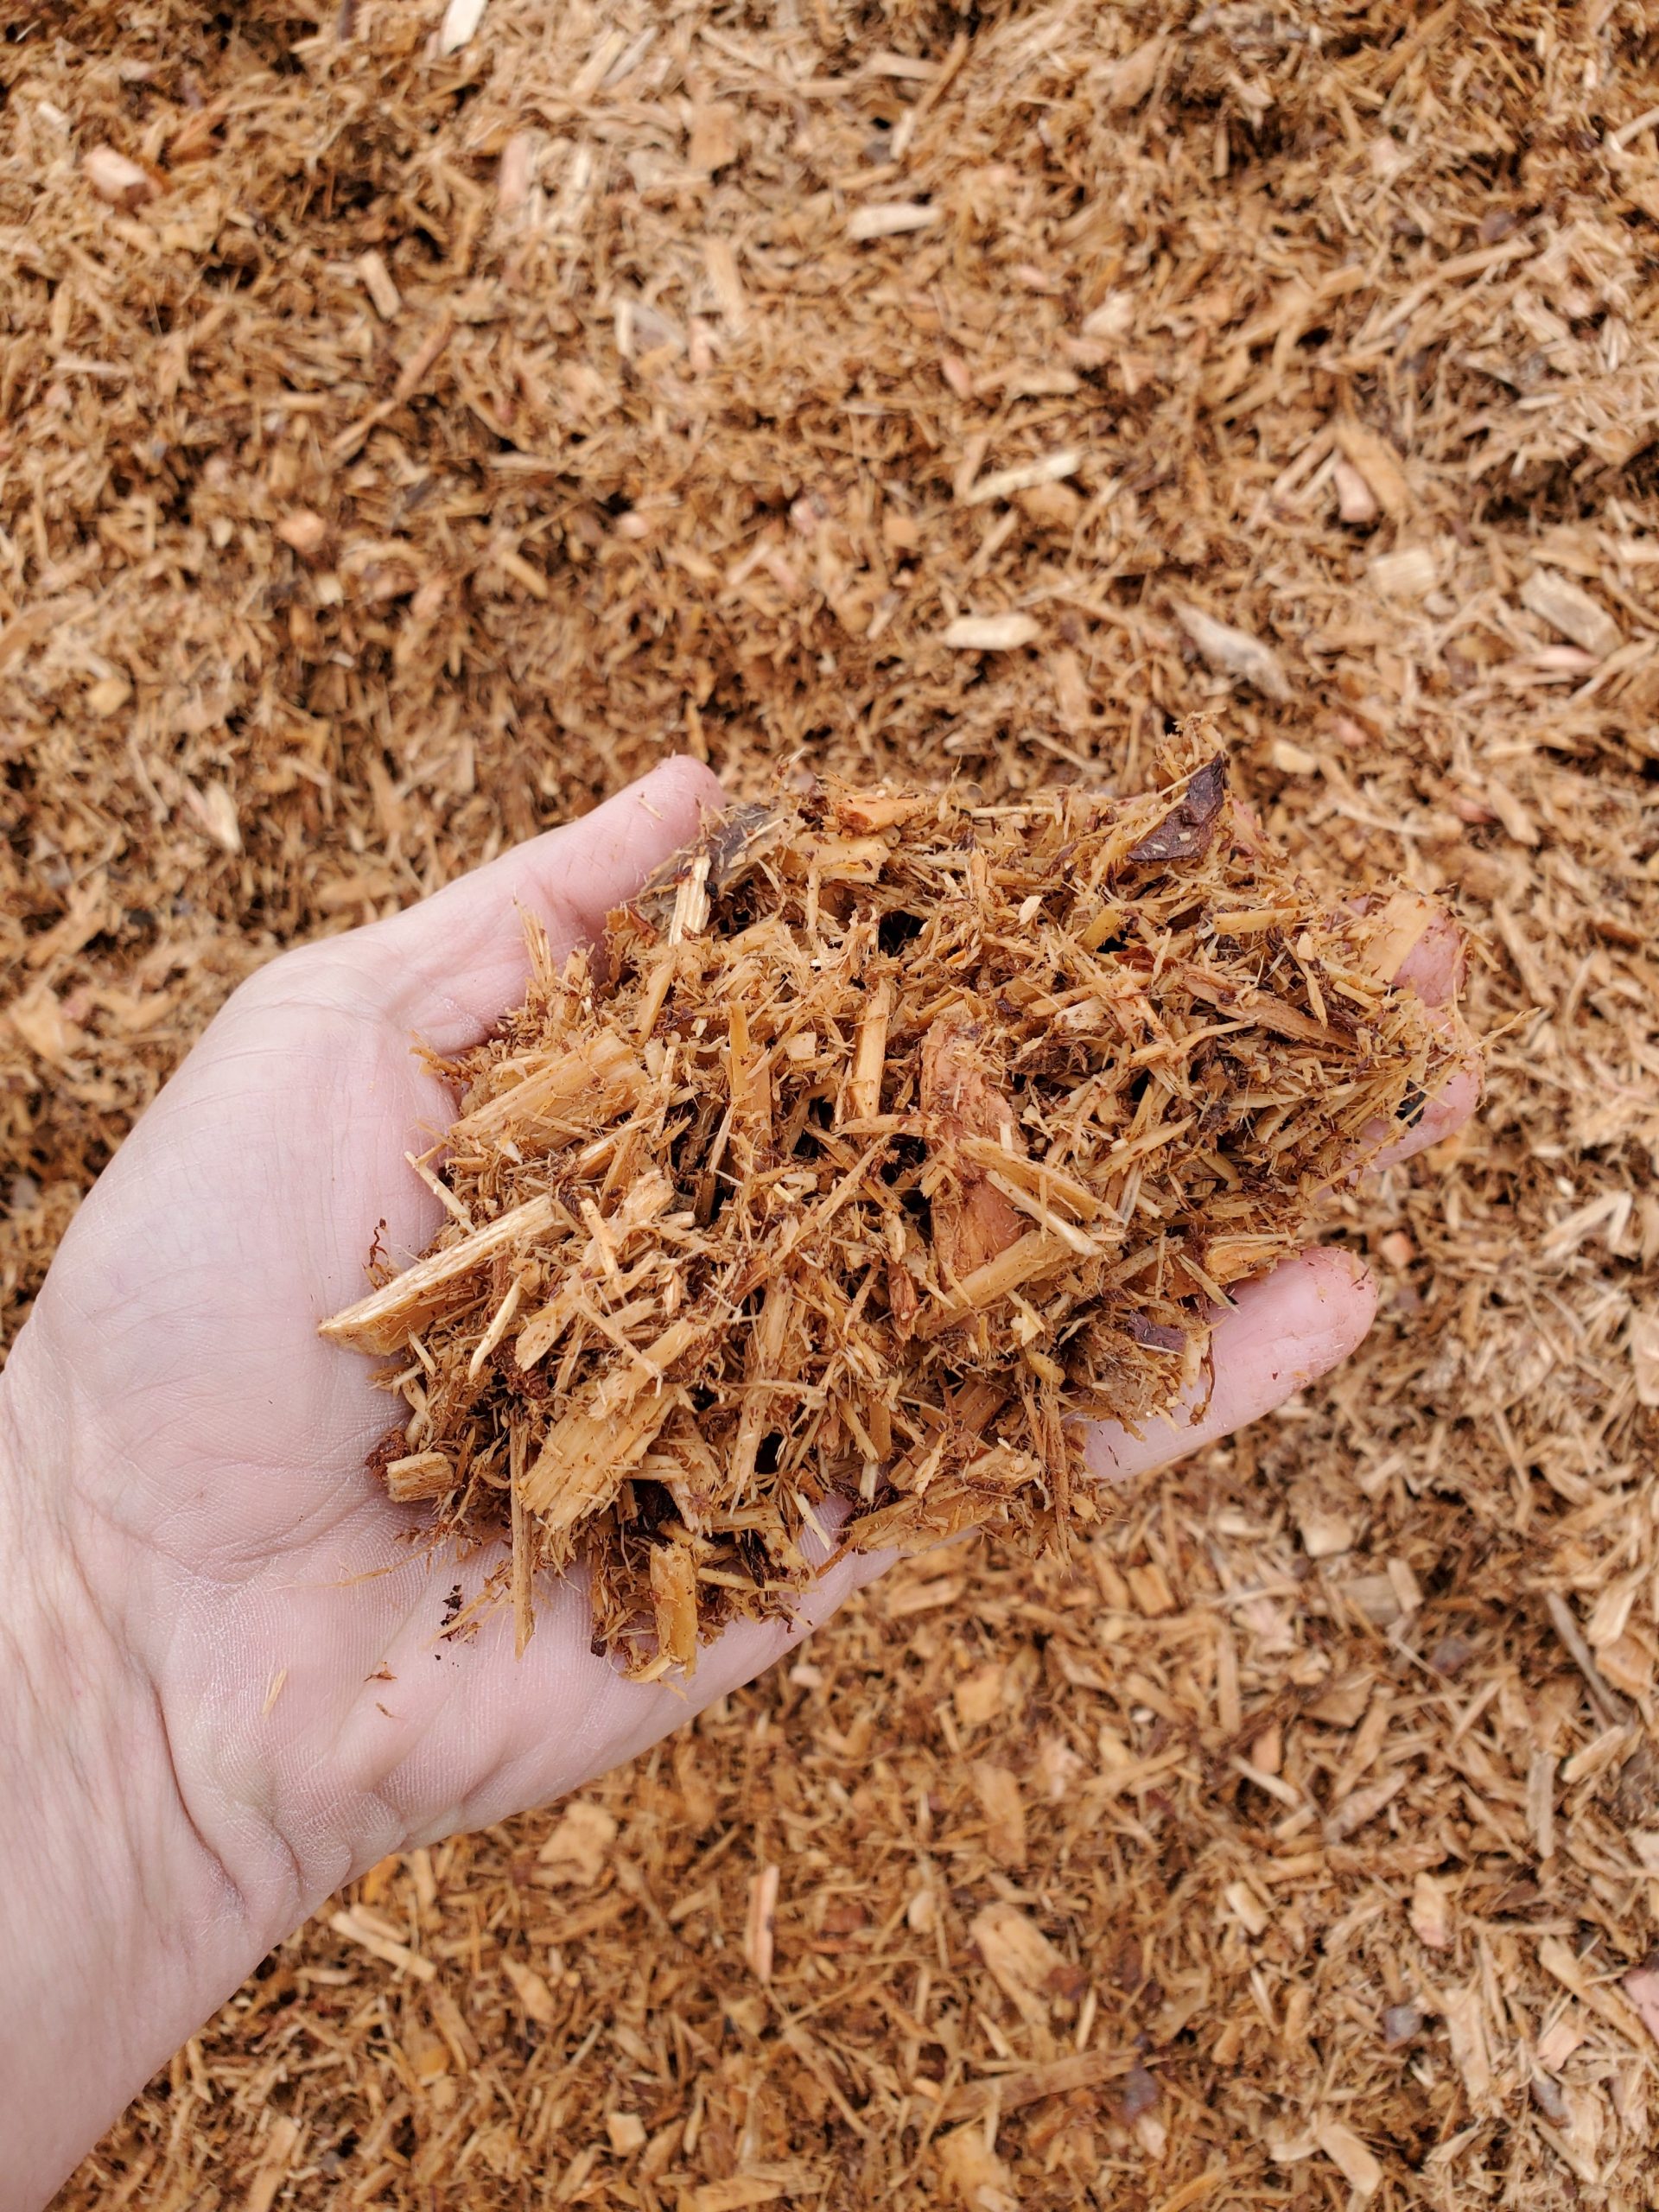 Clean Wood Chips (price per cubic yard)